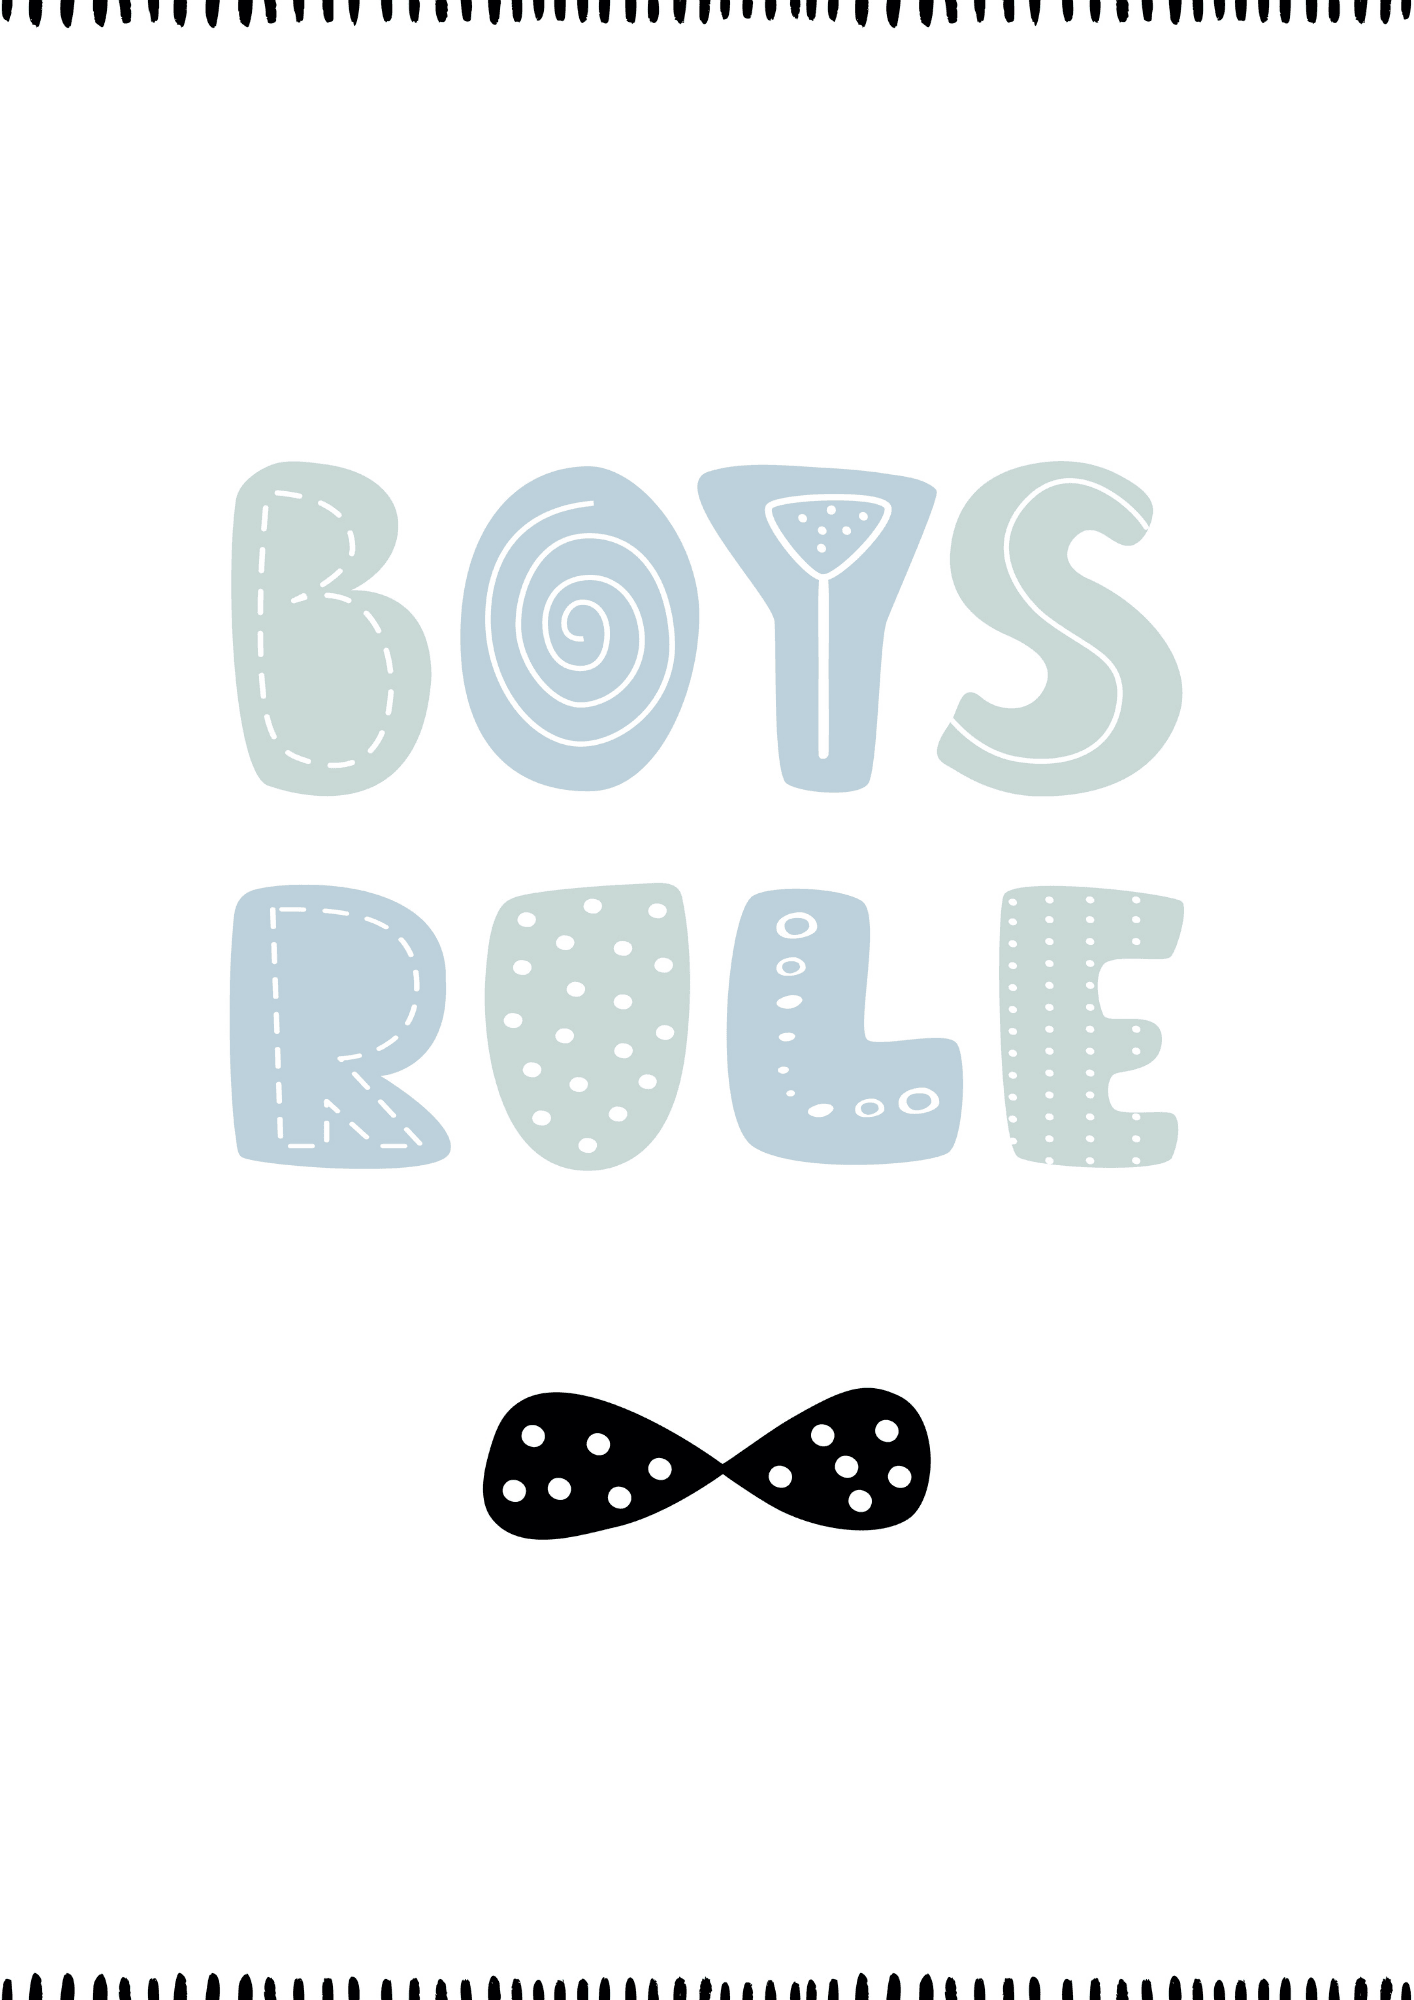 Boys Rule Blue - The Ditzy Dodo